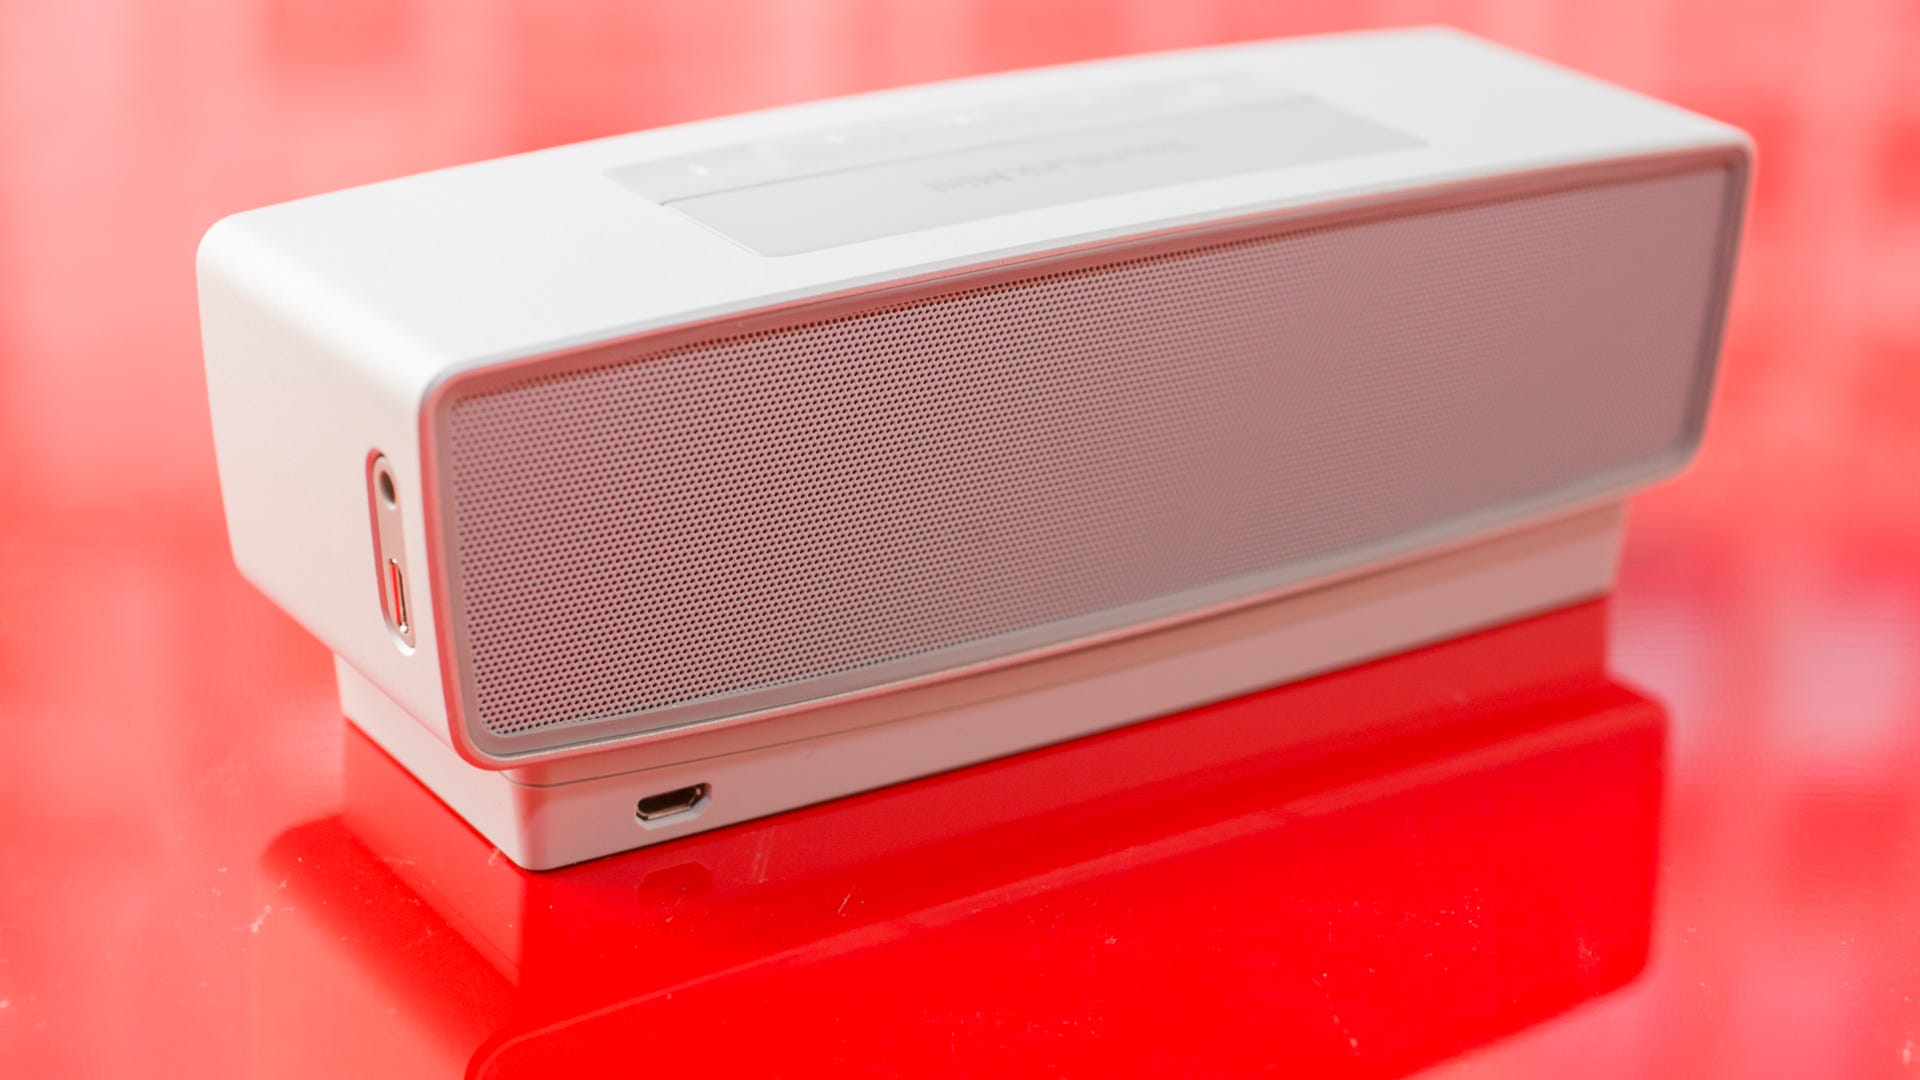 Bose SoundLink CNET A better II - Bluetooth Mini speaker even gets great review